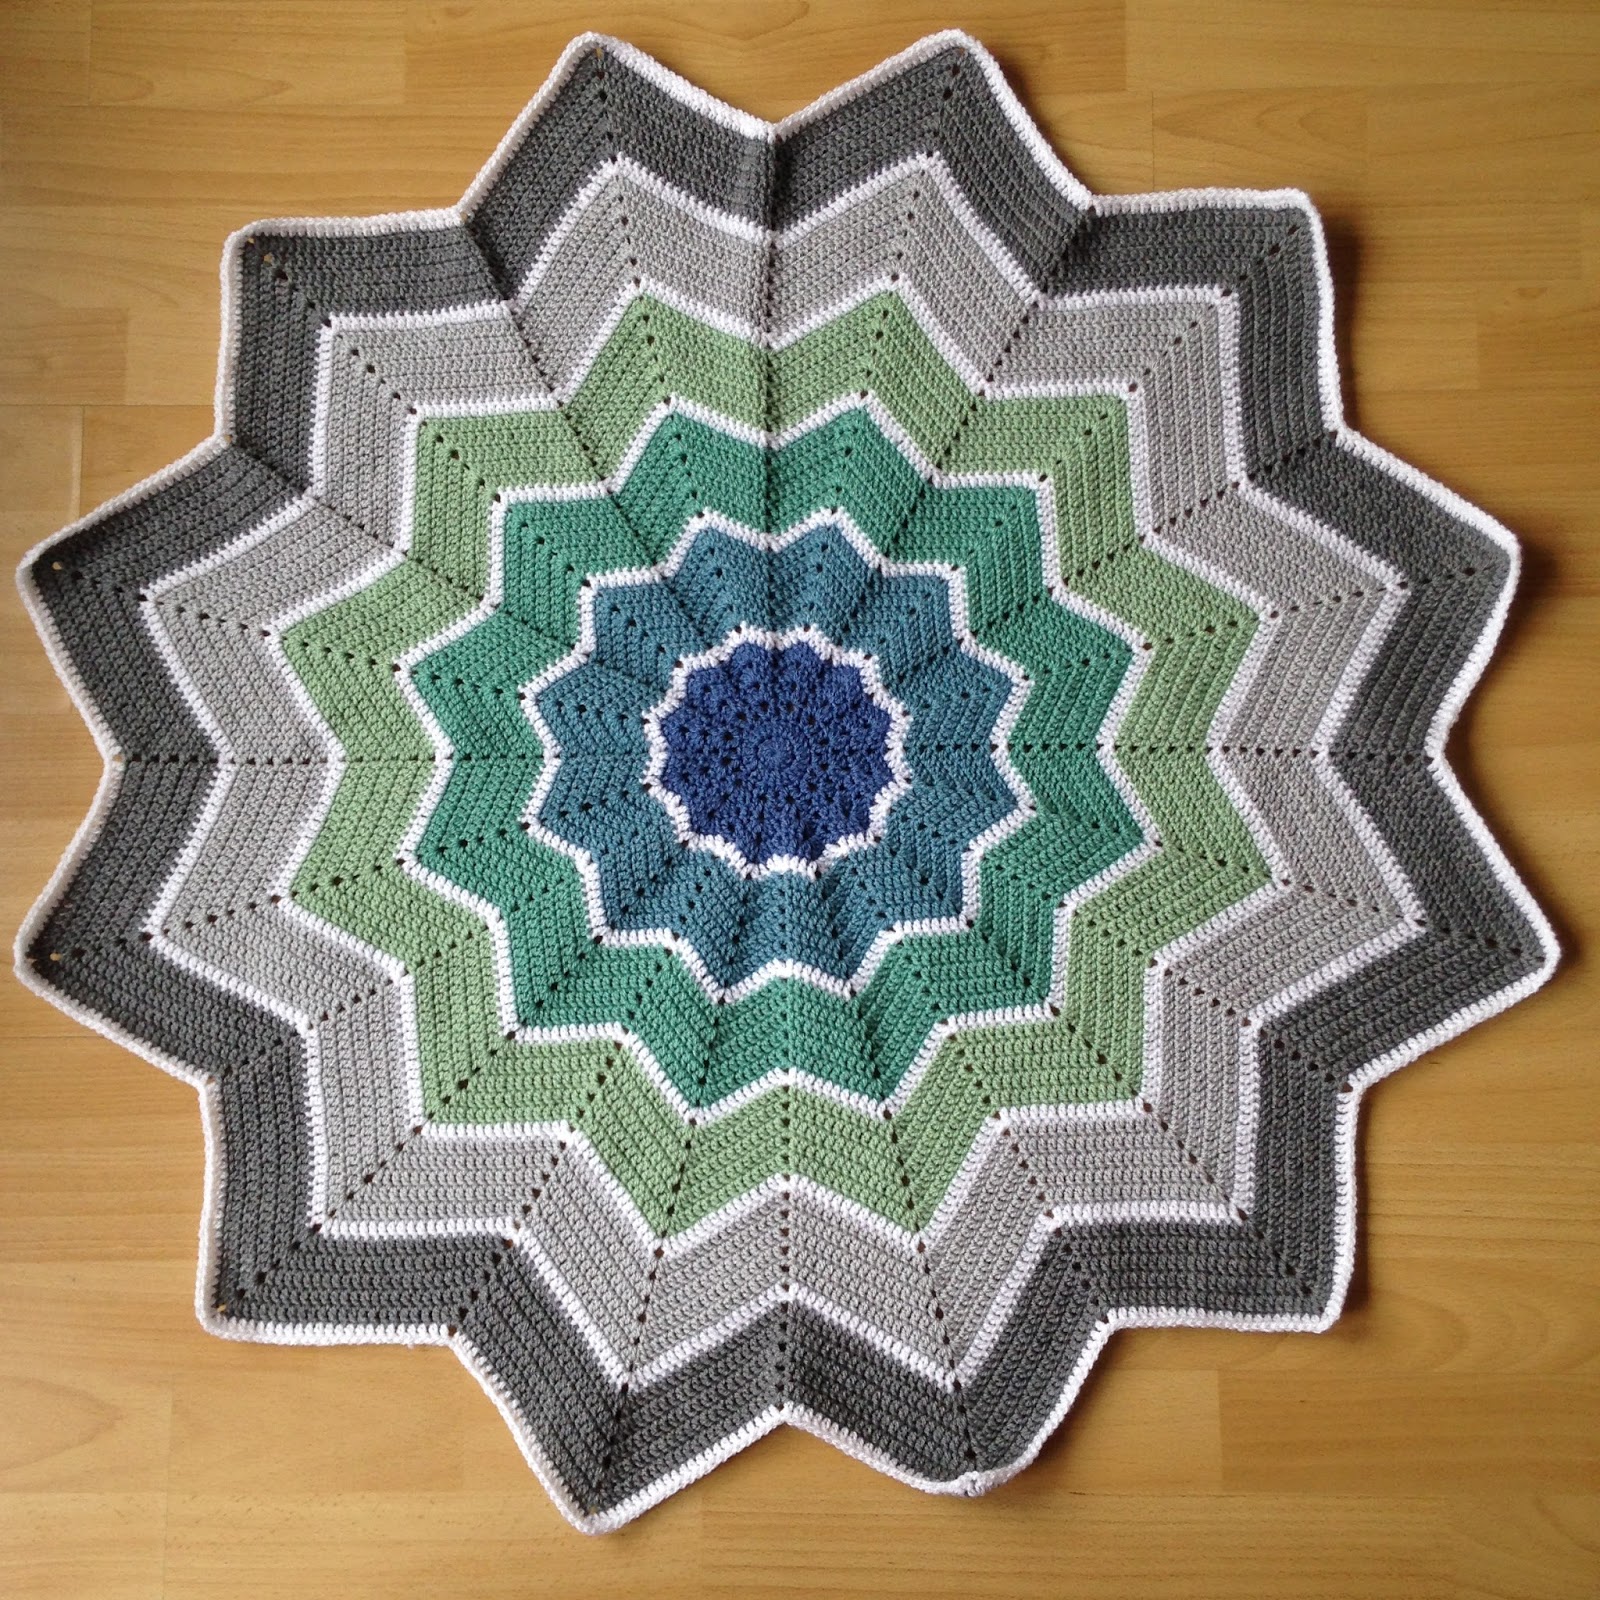 Blocking acrylic crochet blankets - Crafternoon Treats